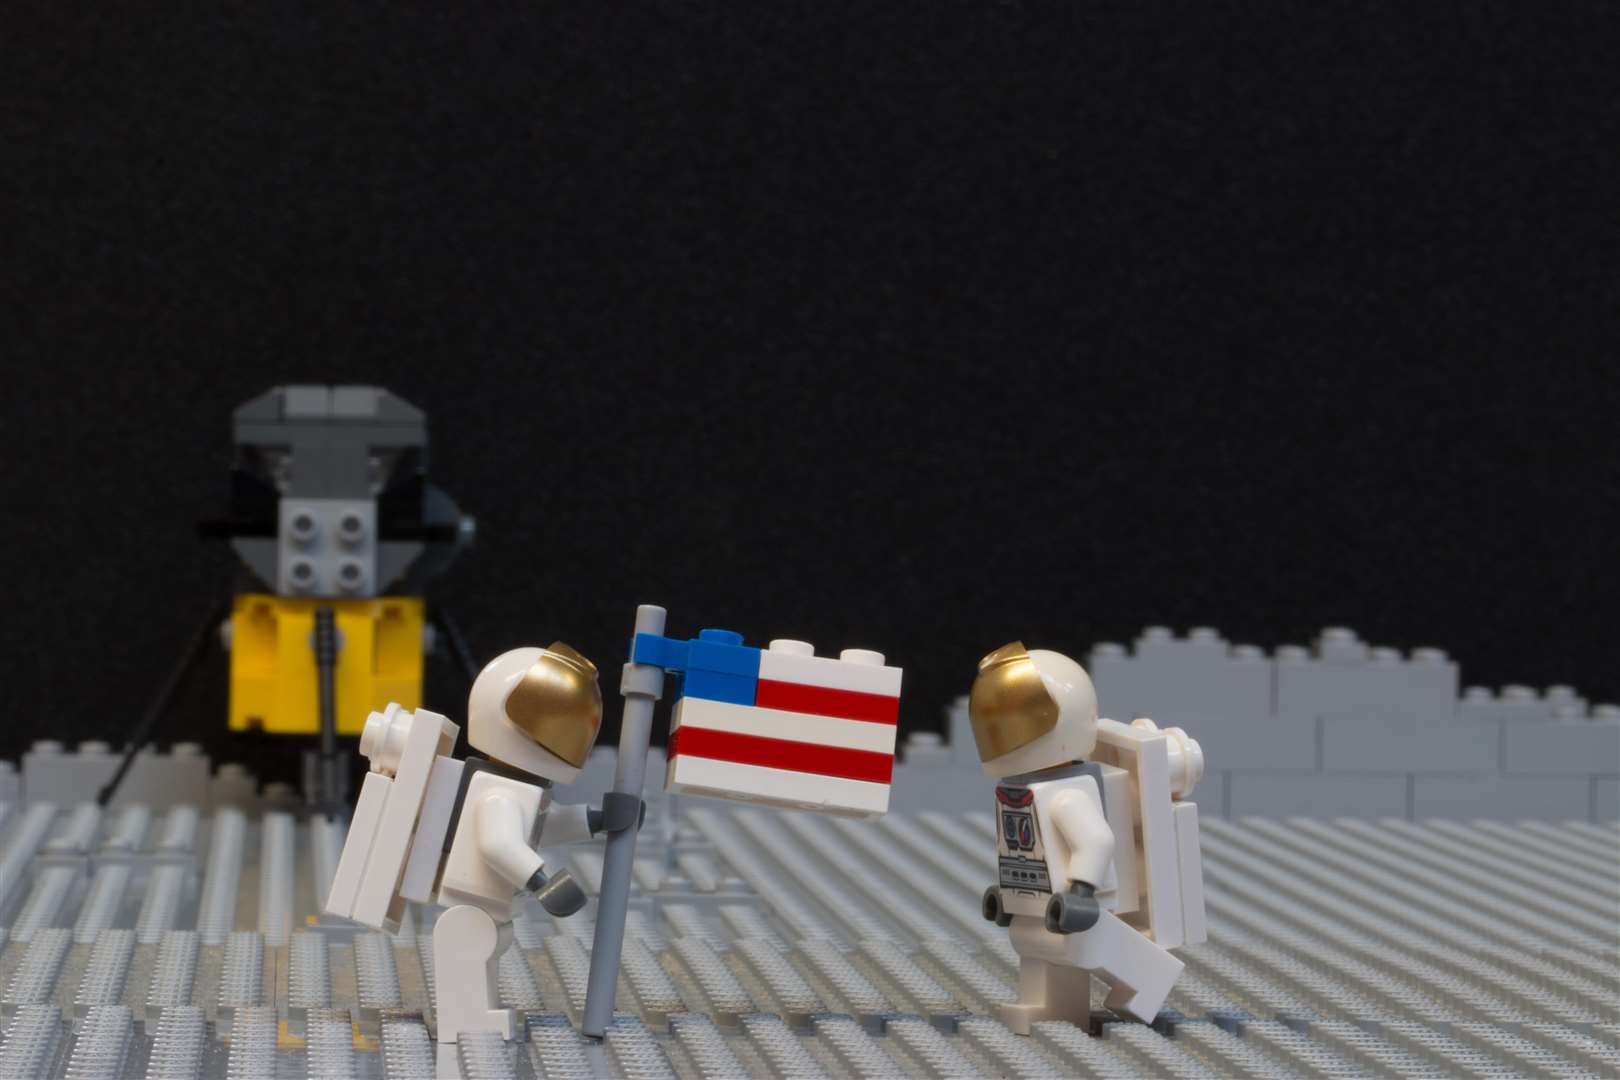 Landing on the moon LEGO style